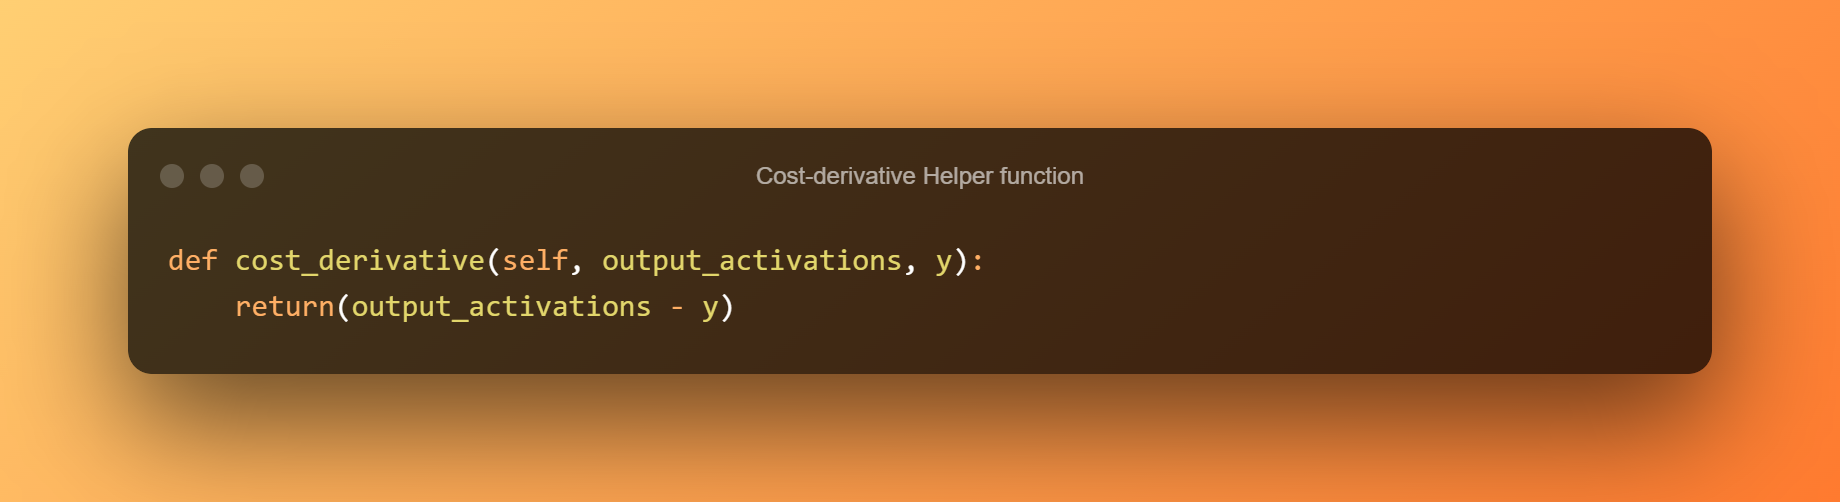 Cost Derivative Helper Function